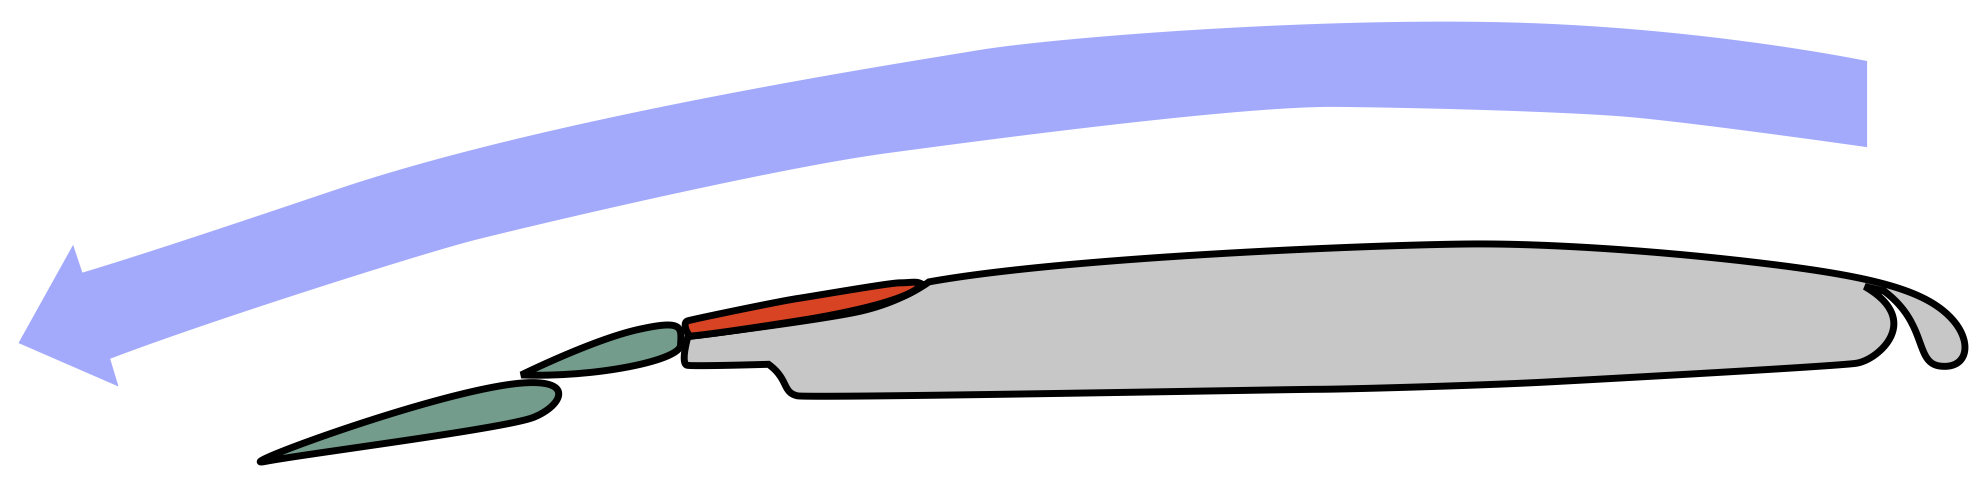 wing diagram